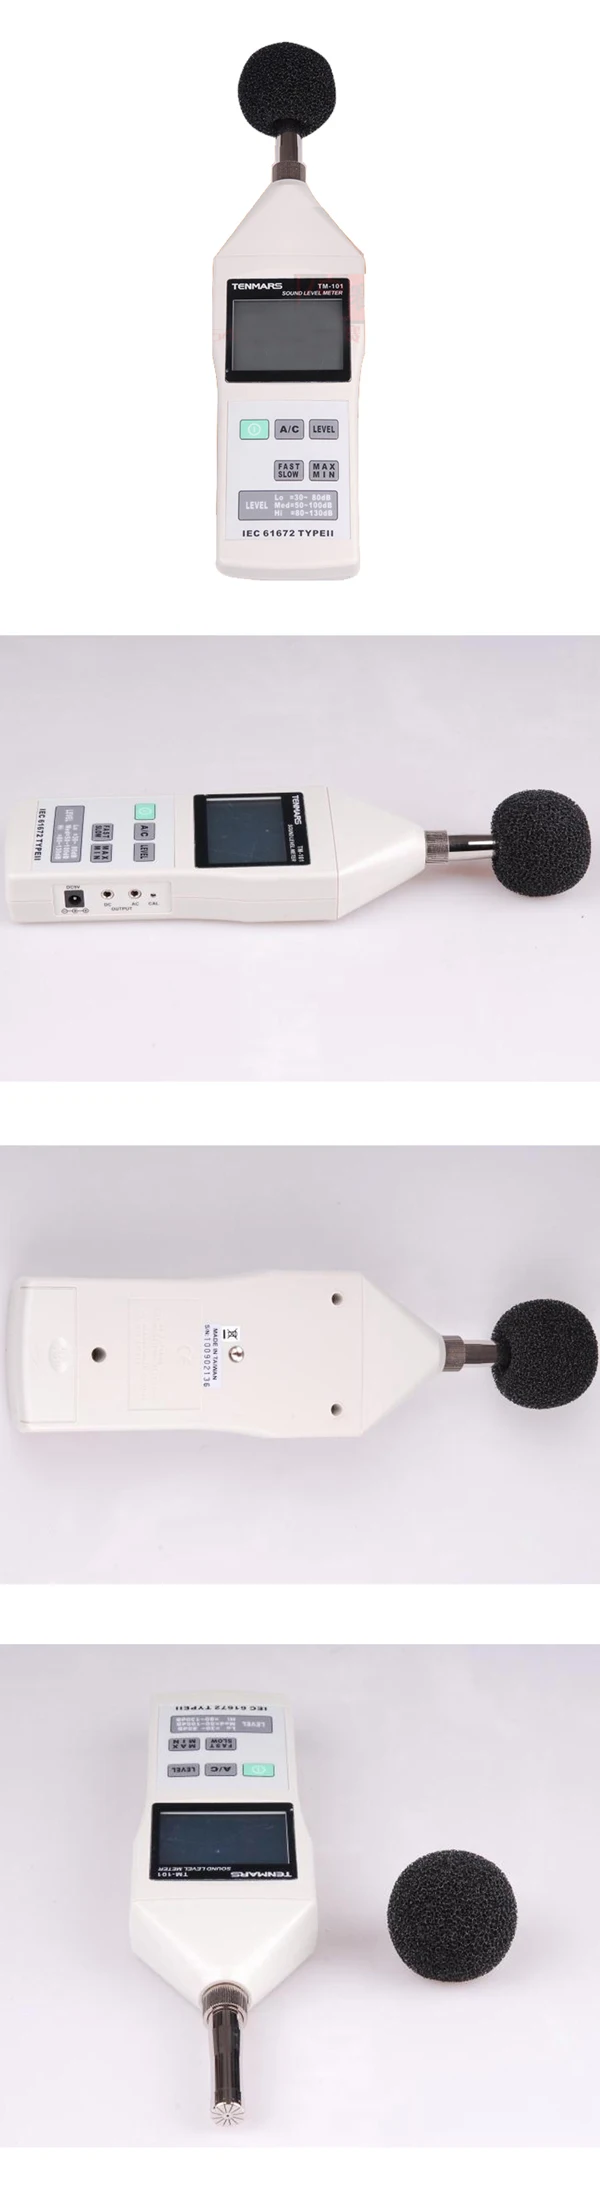 Tm-101 Портативный шумомер Шум анализатор звук тестер IEC 61672, Тип II 30-130db